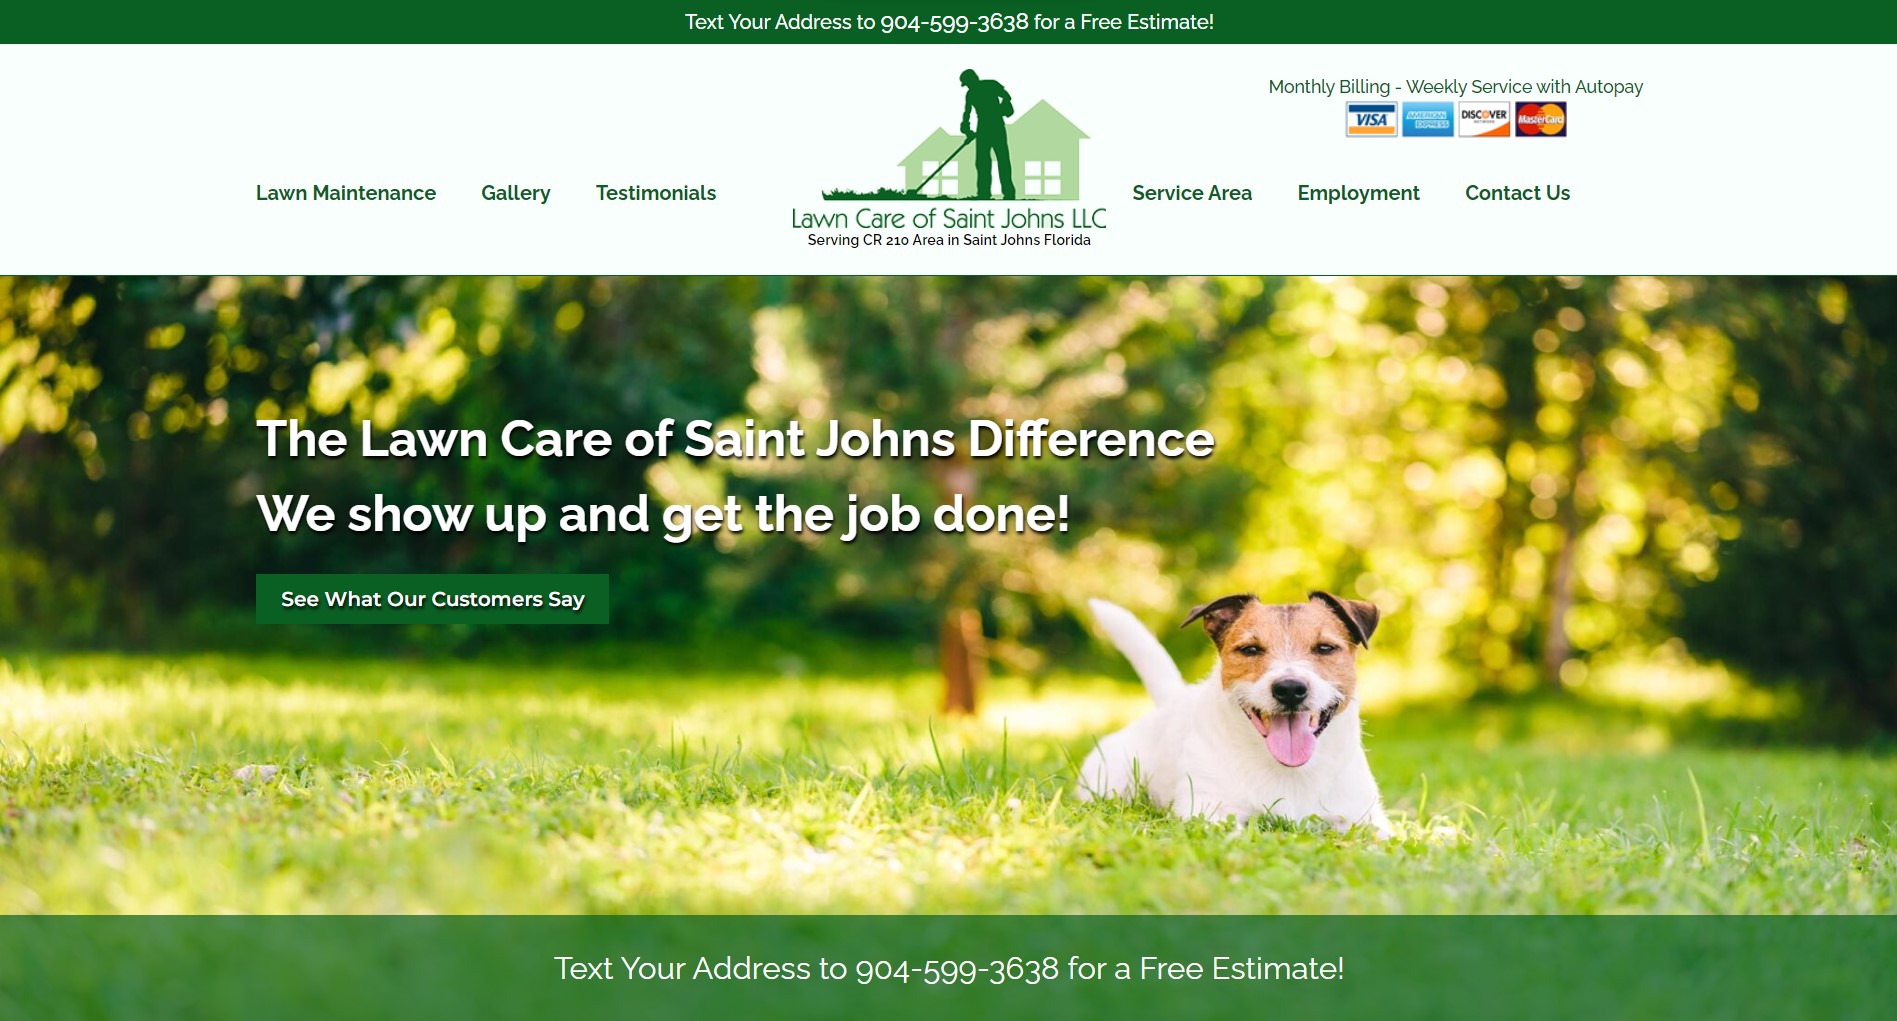 Lawn Care of Saint Johns LLC